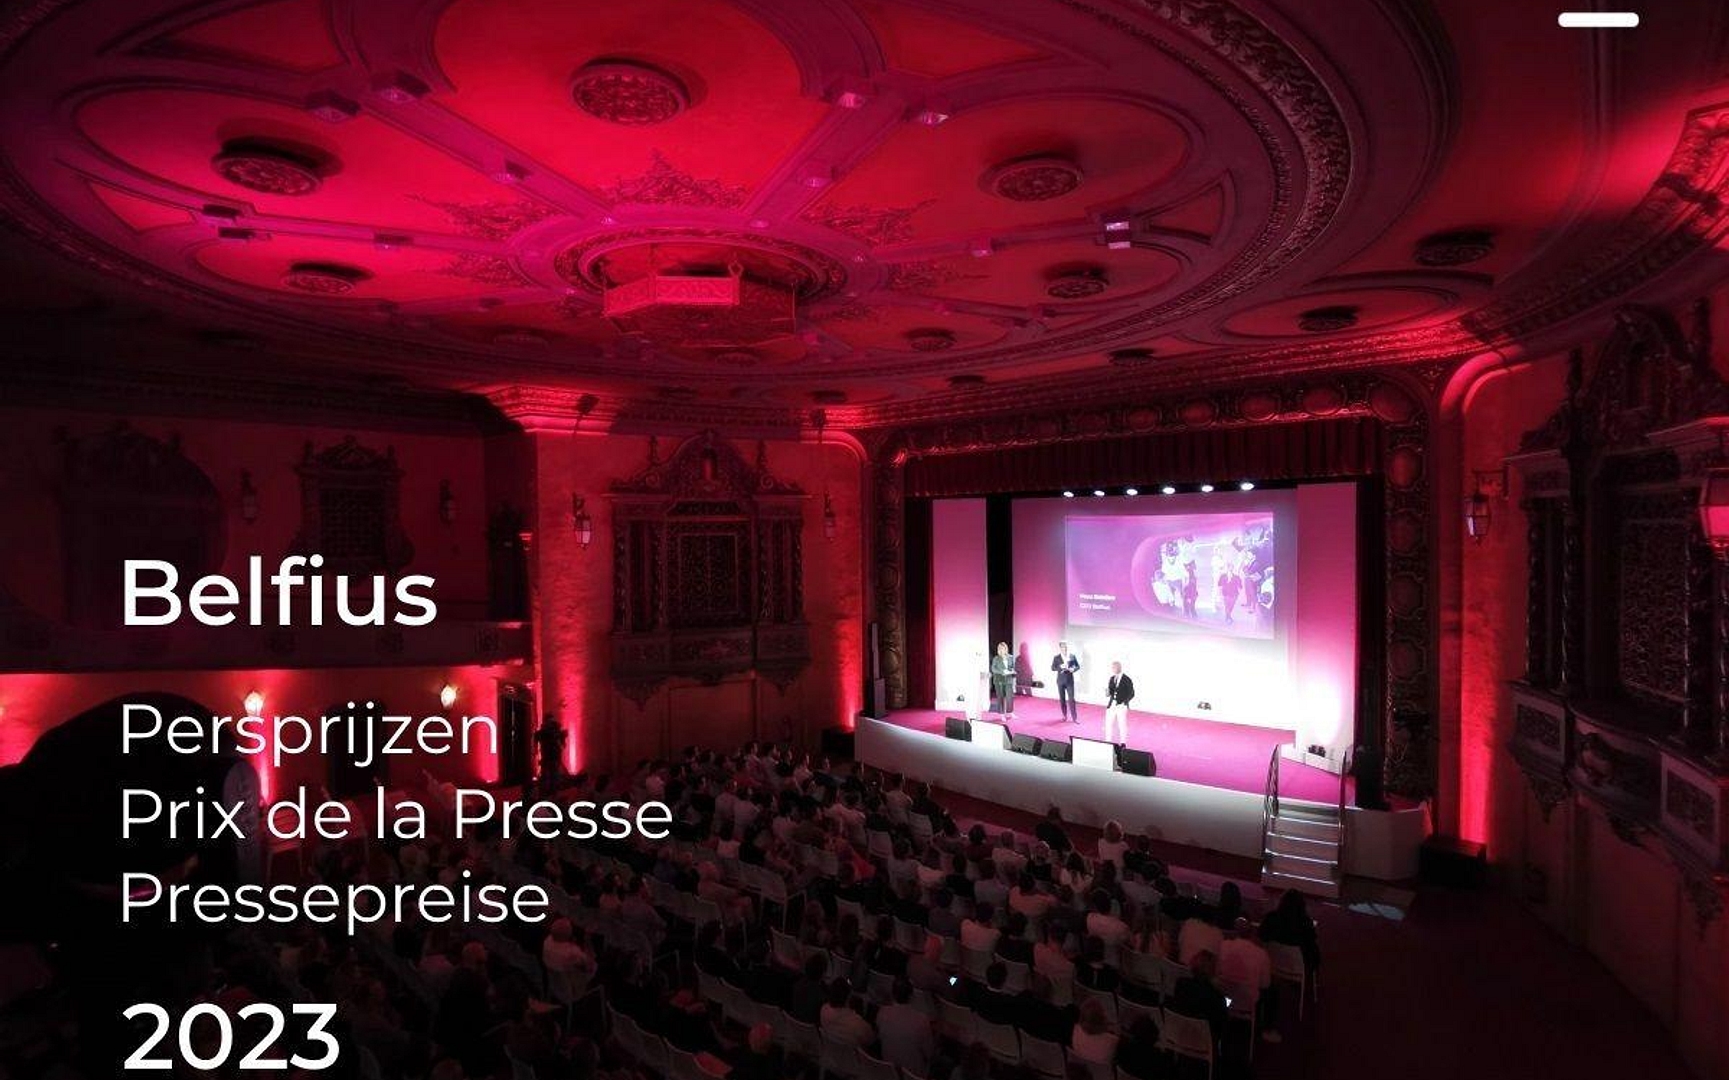 De Tijd's 'Mastermind' Project Wins Prestigious Belfius Press Award for Digital Innovation